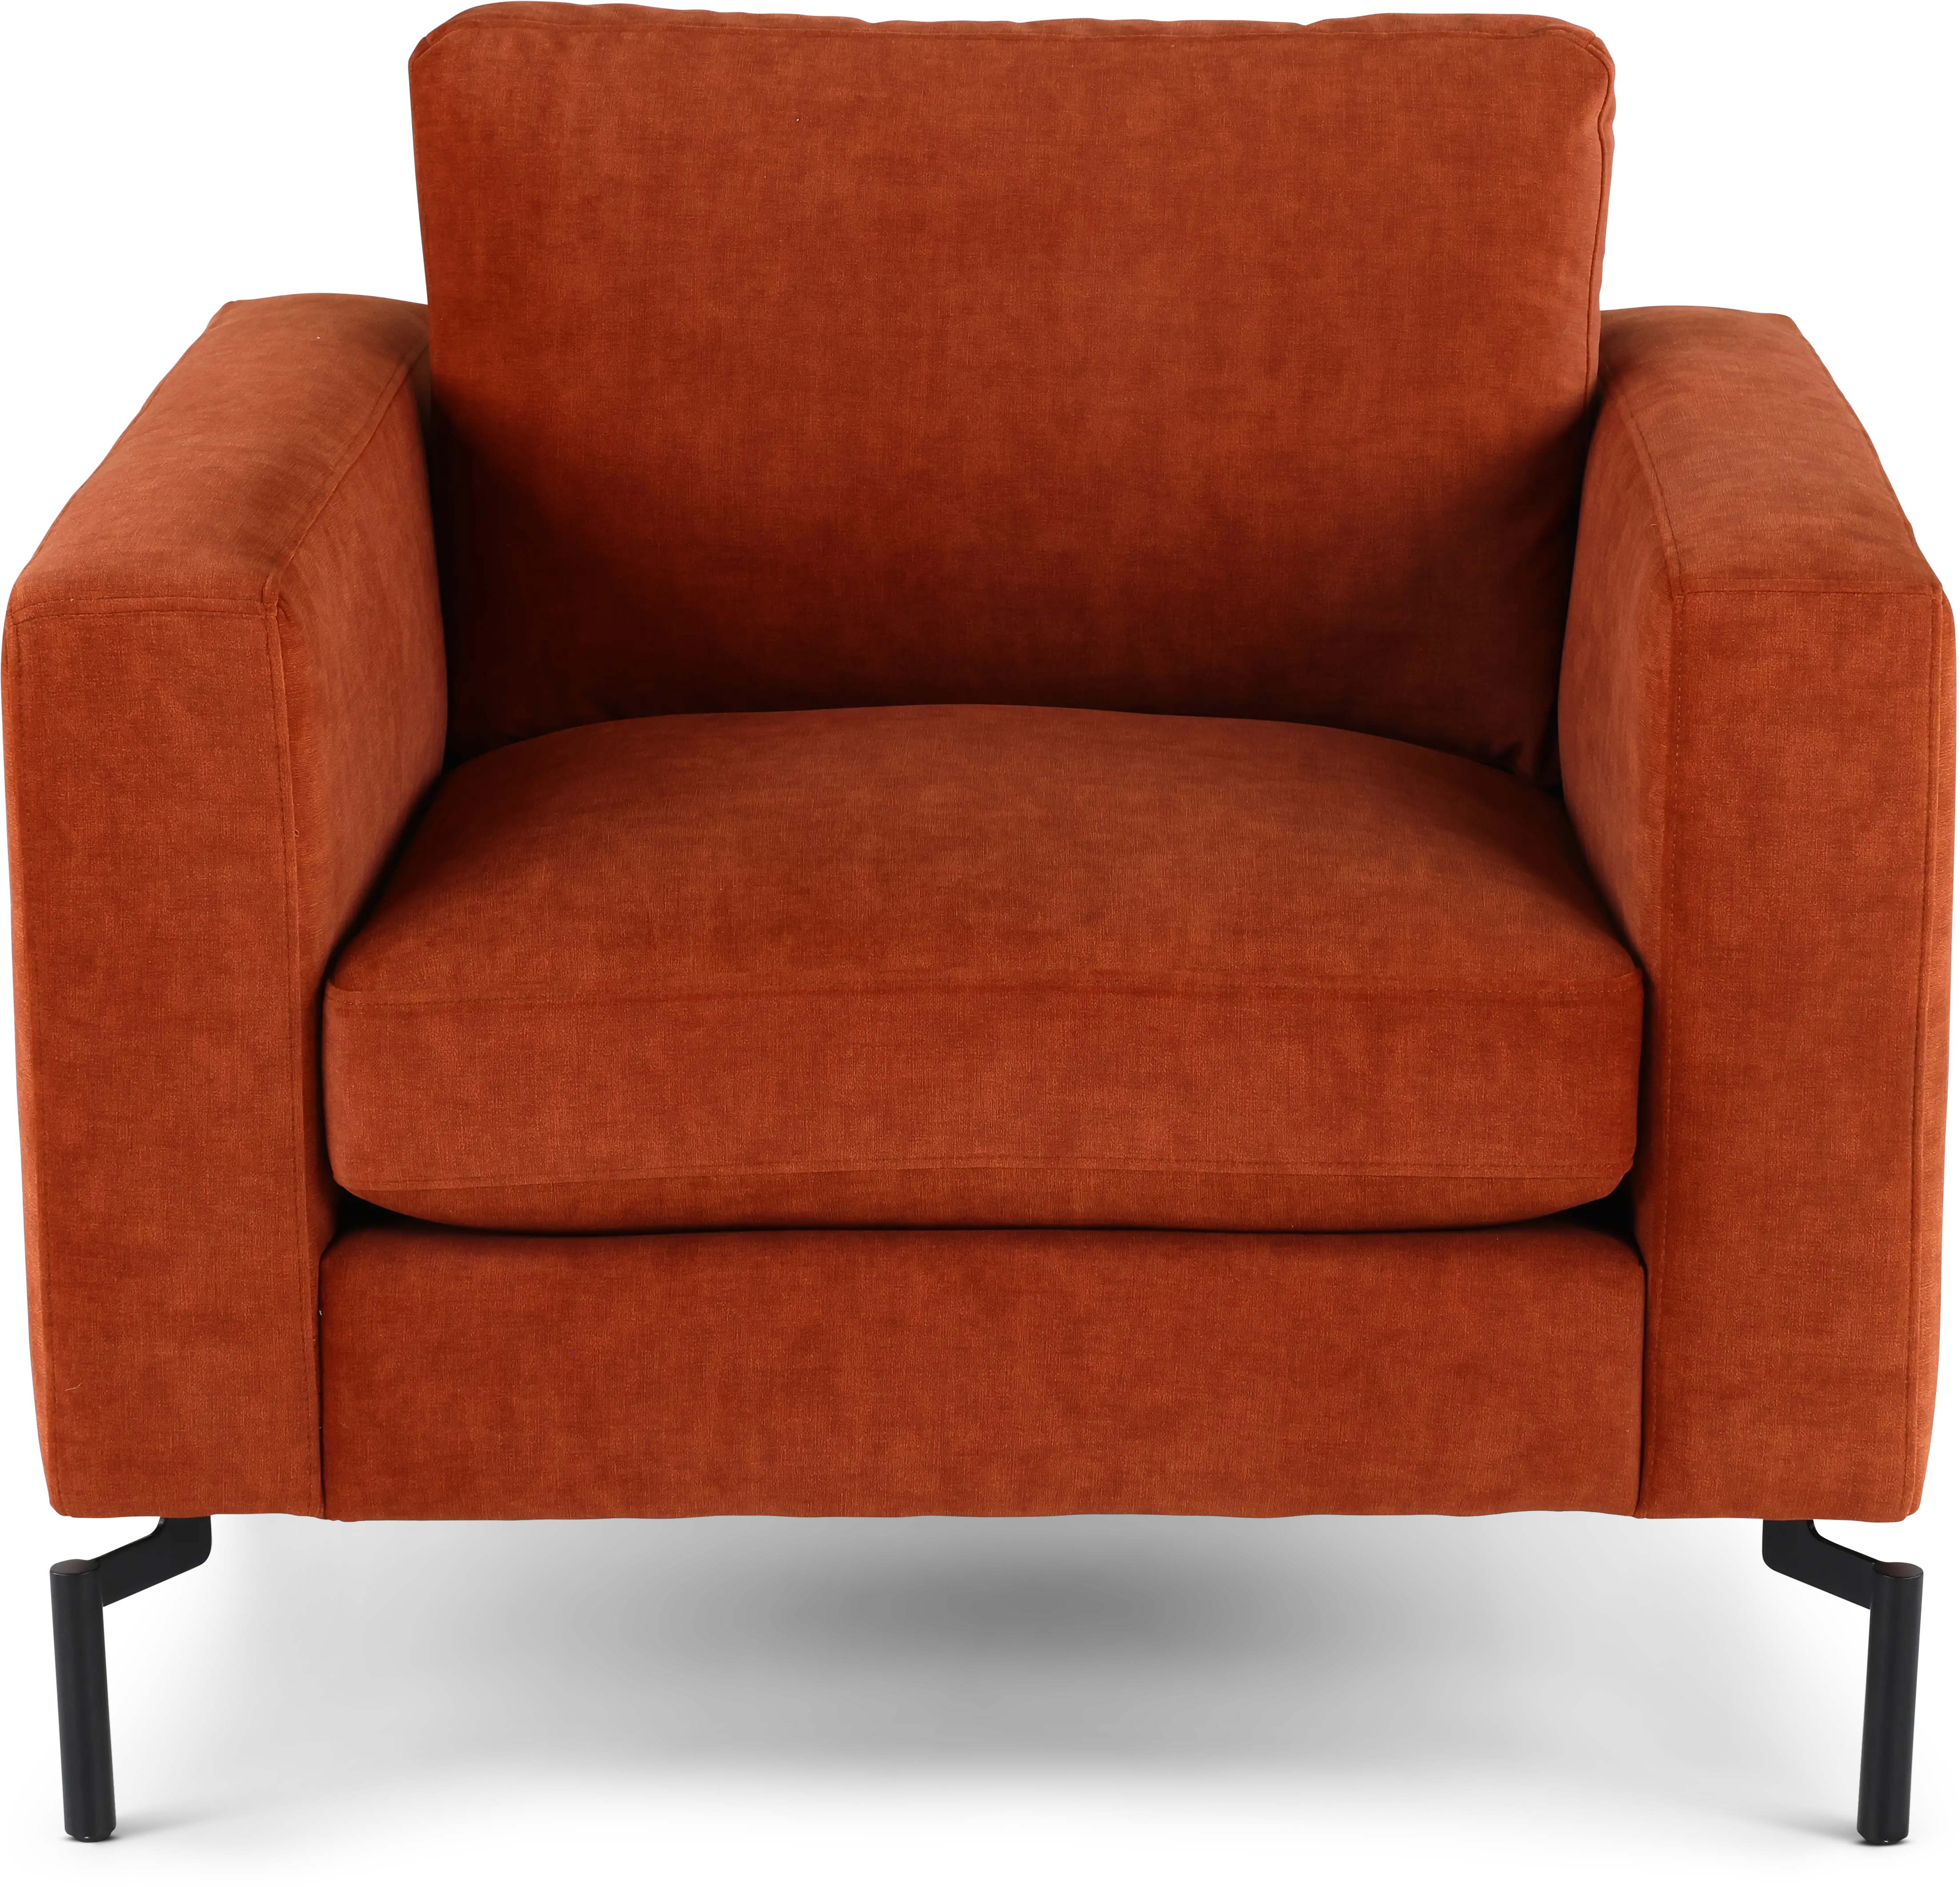 Tribeca Rust Orange Chair